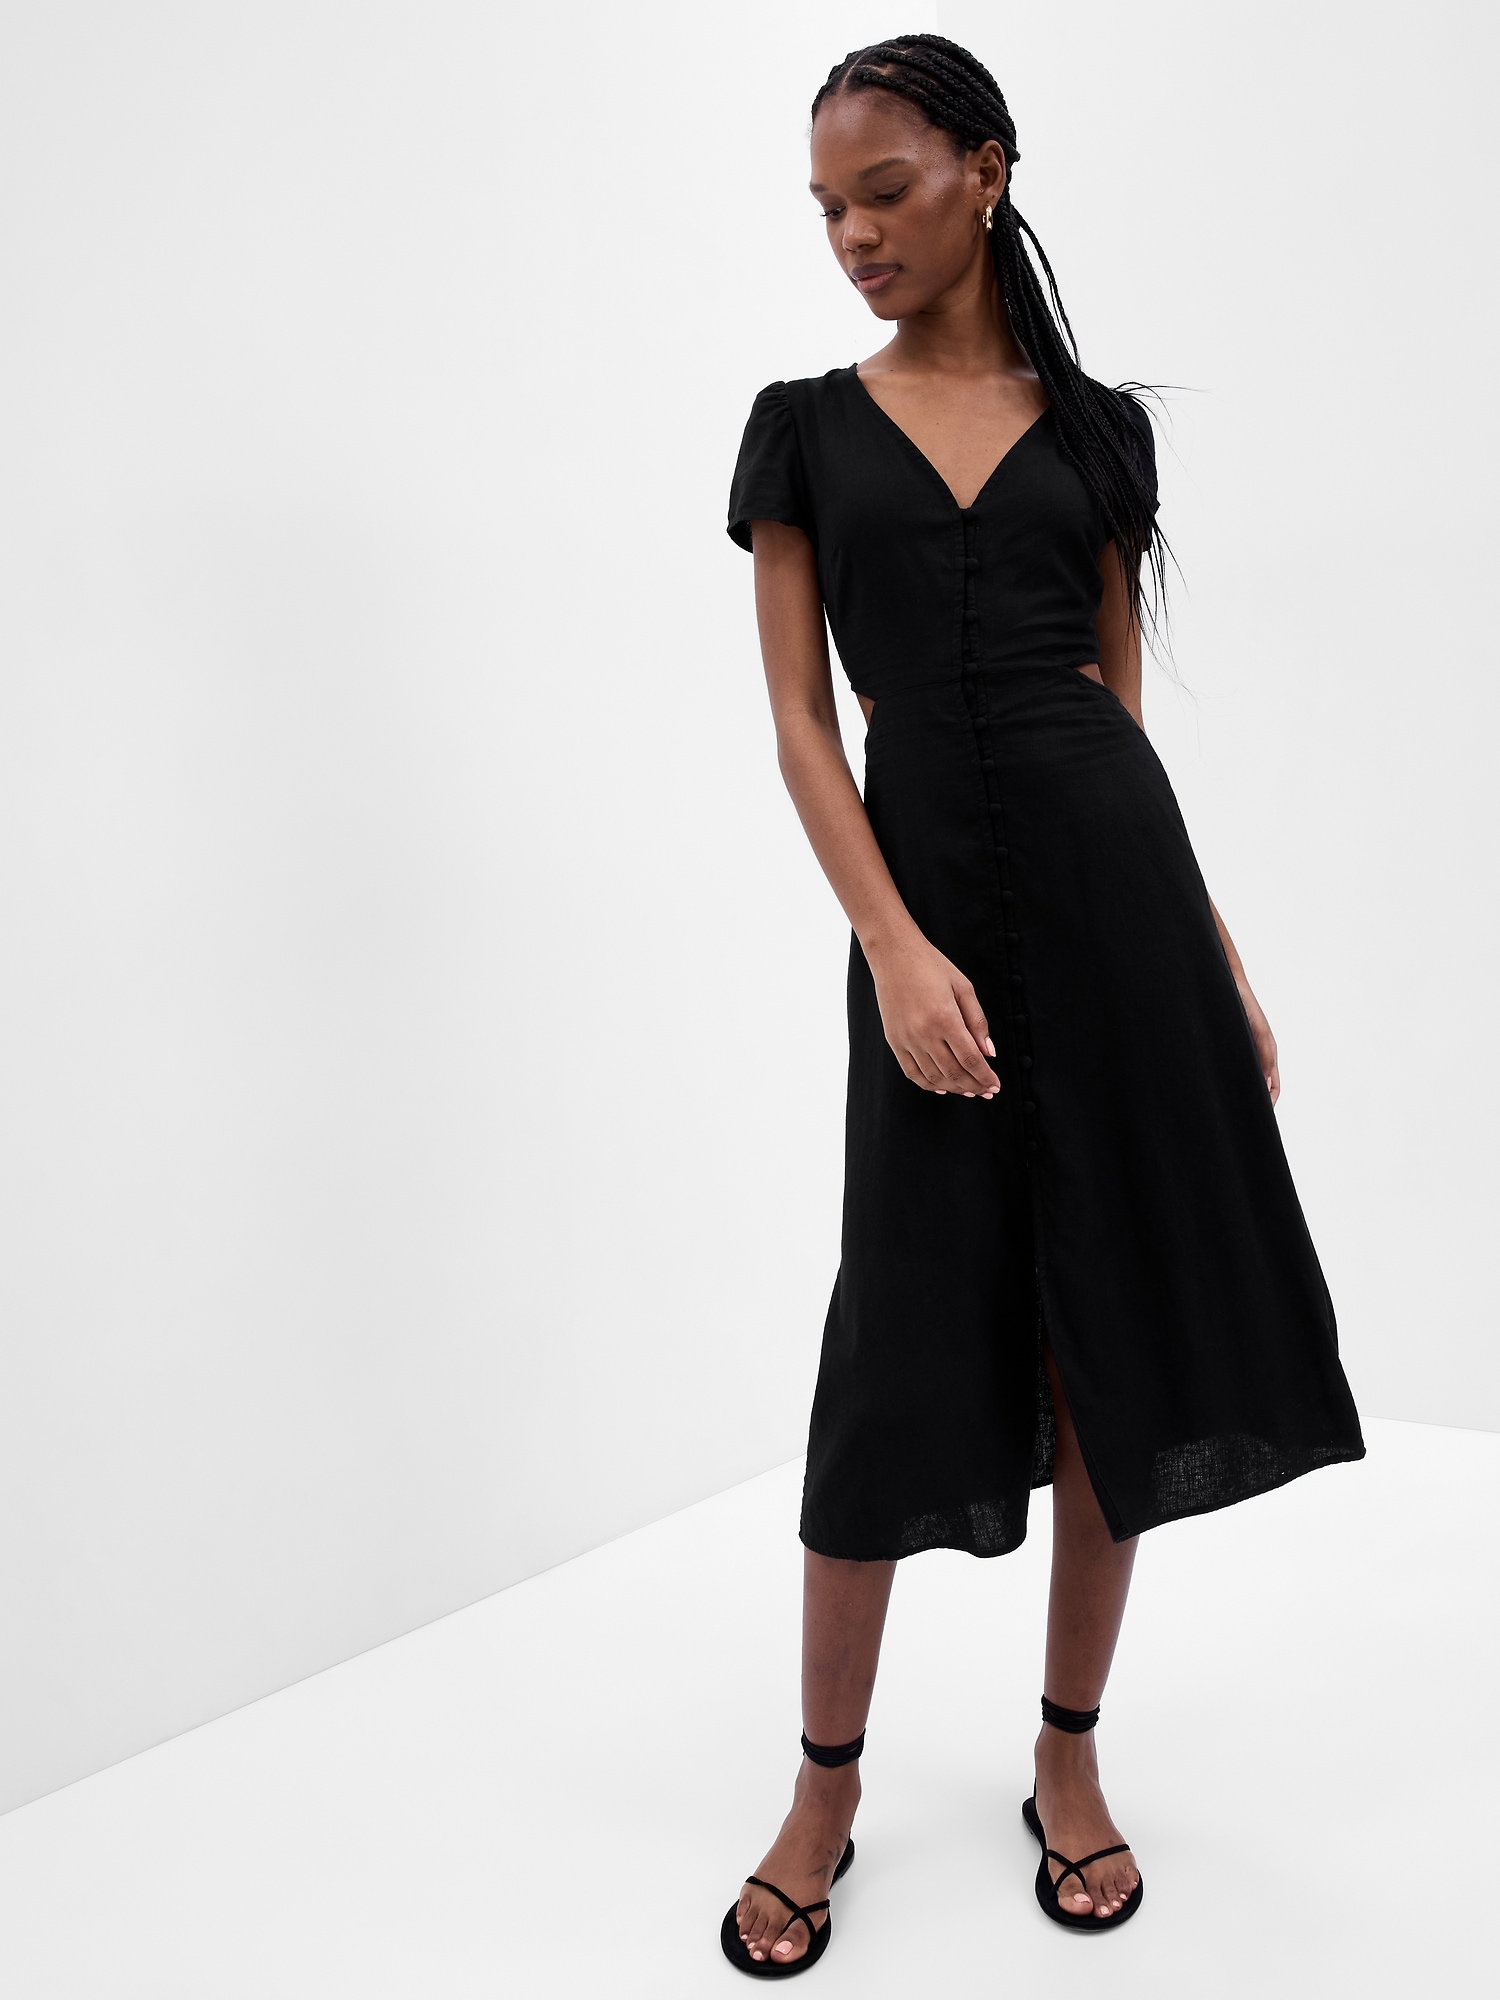 gap black dress